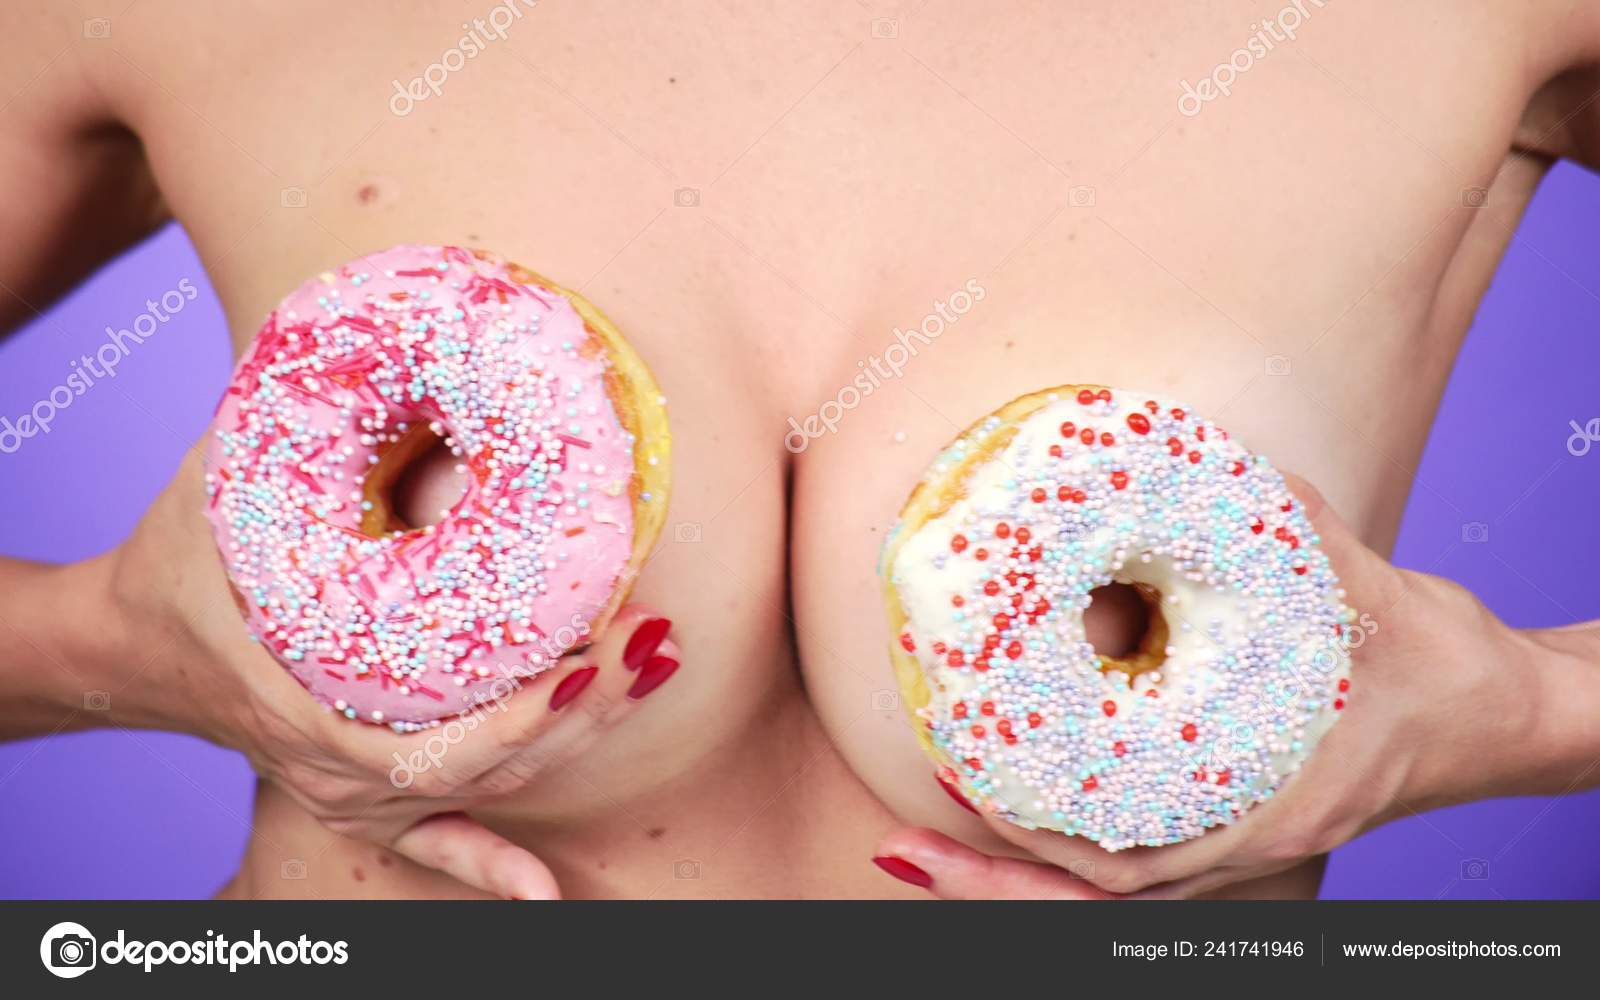 Porn donut